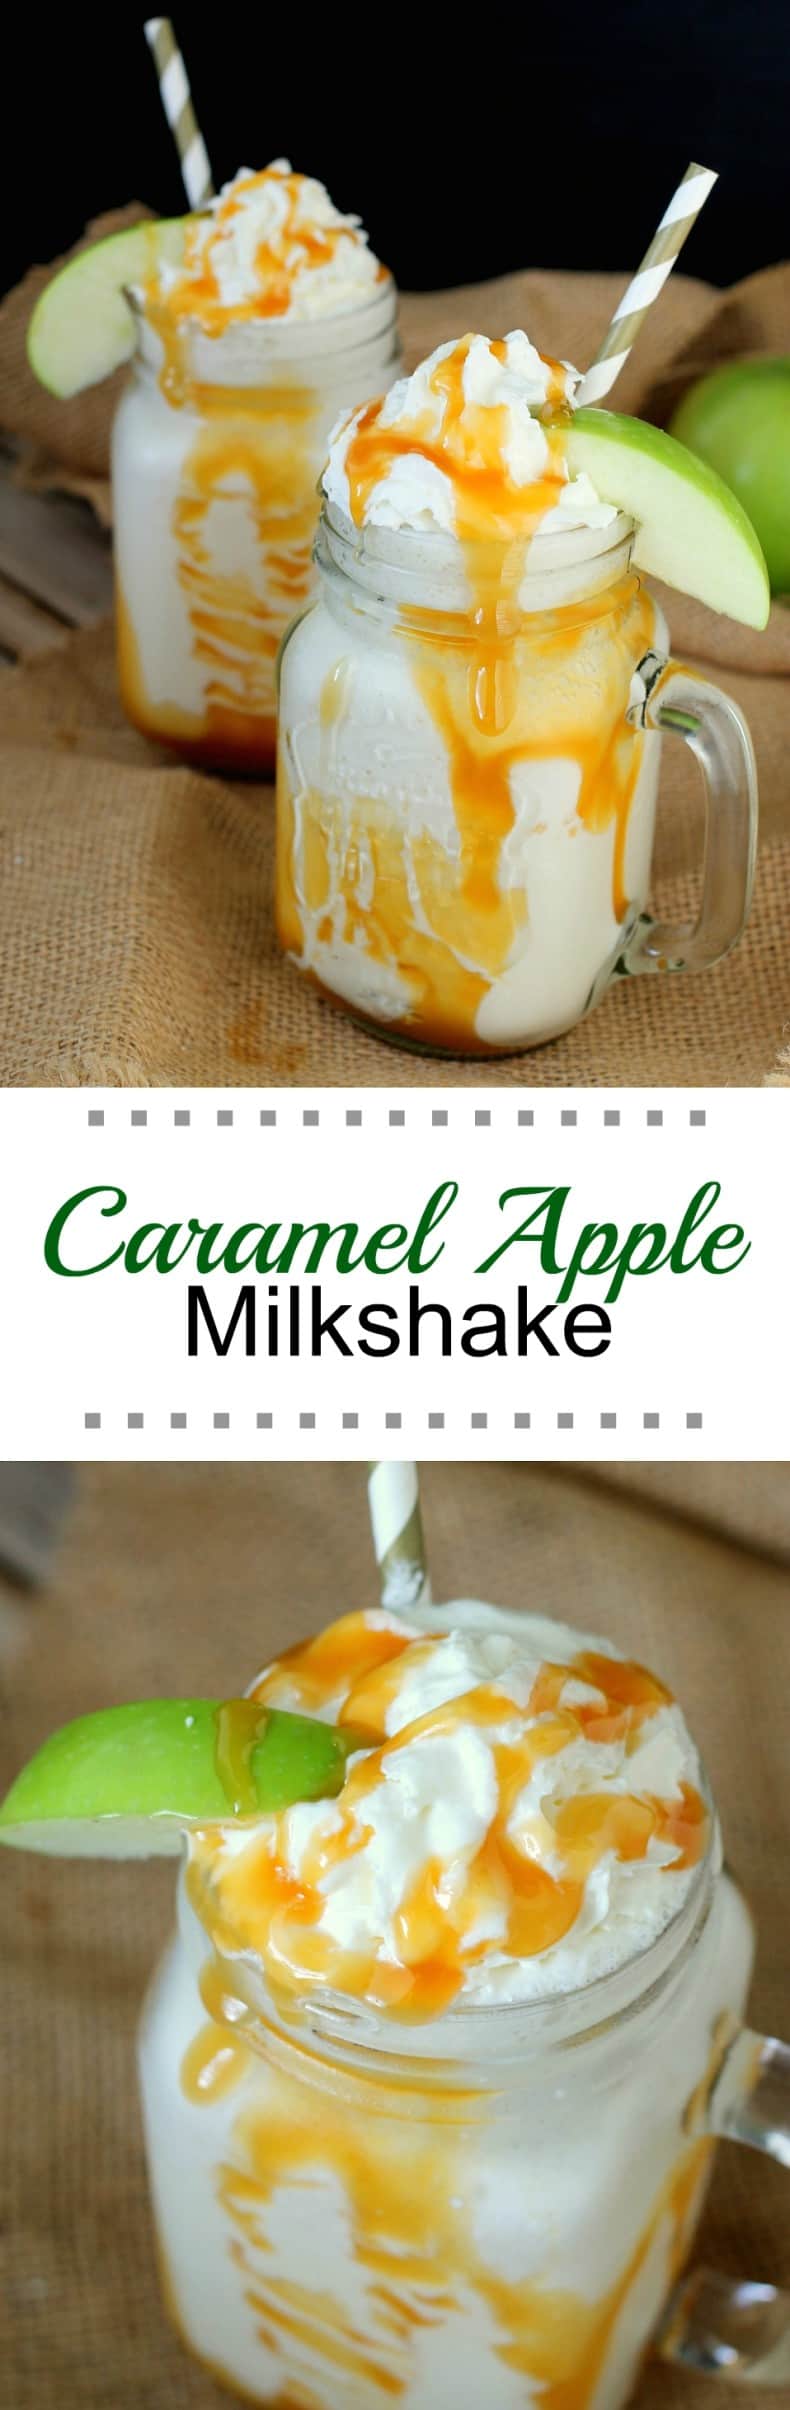 caramel apple milkshake beverage recipe